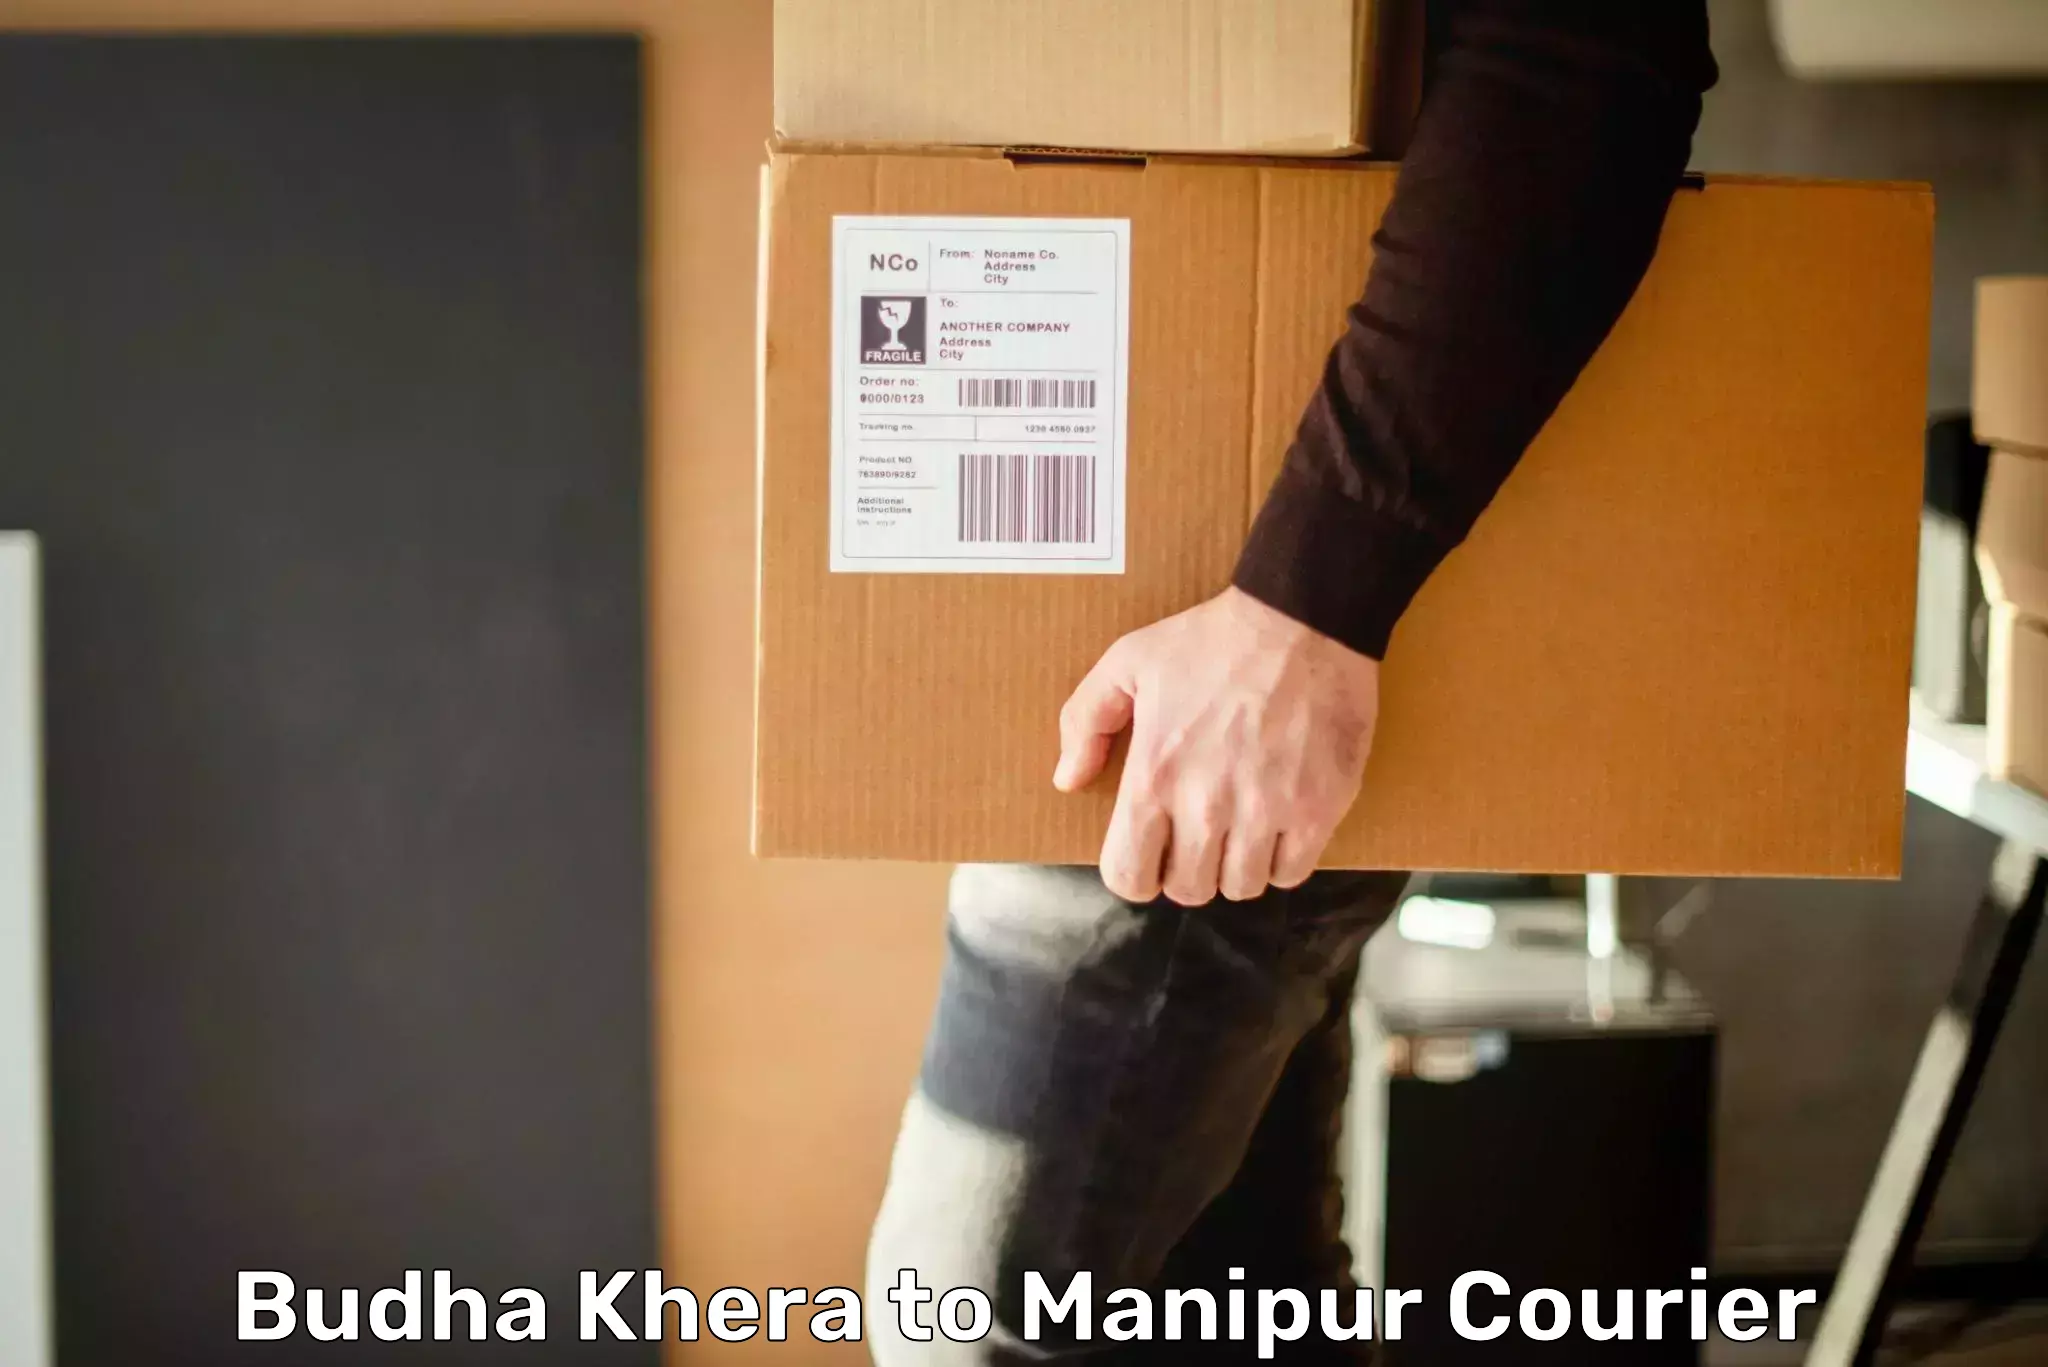 Customer-focused courier Budha Khera to Manipur